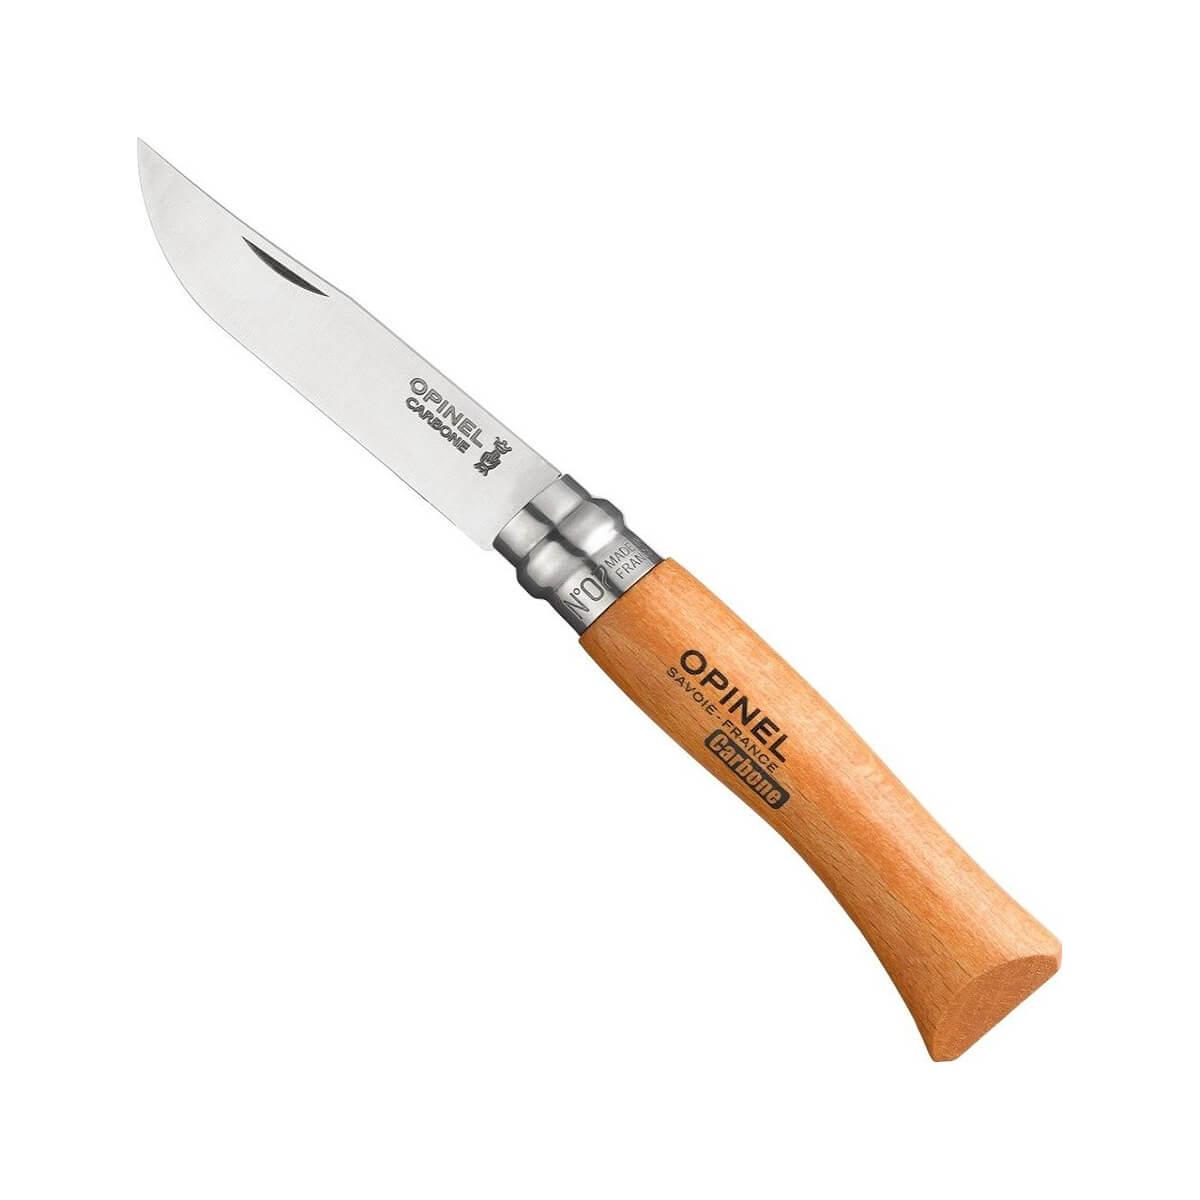  No.07 Carbon Steel Beechwood Pocket Knife